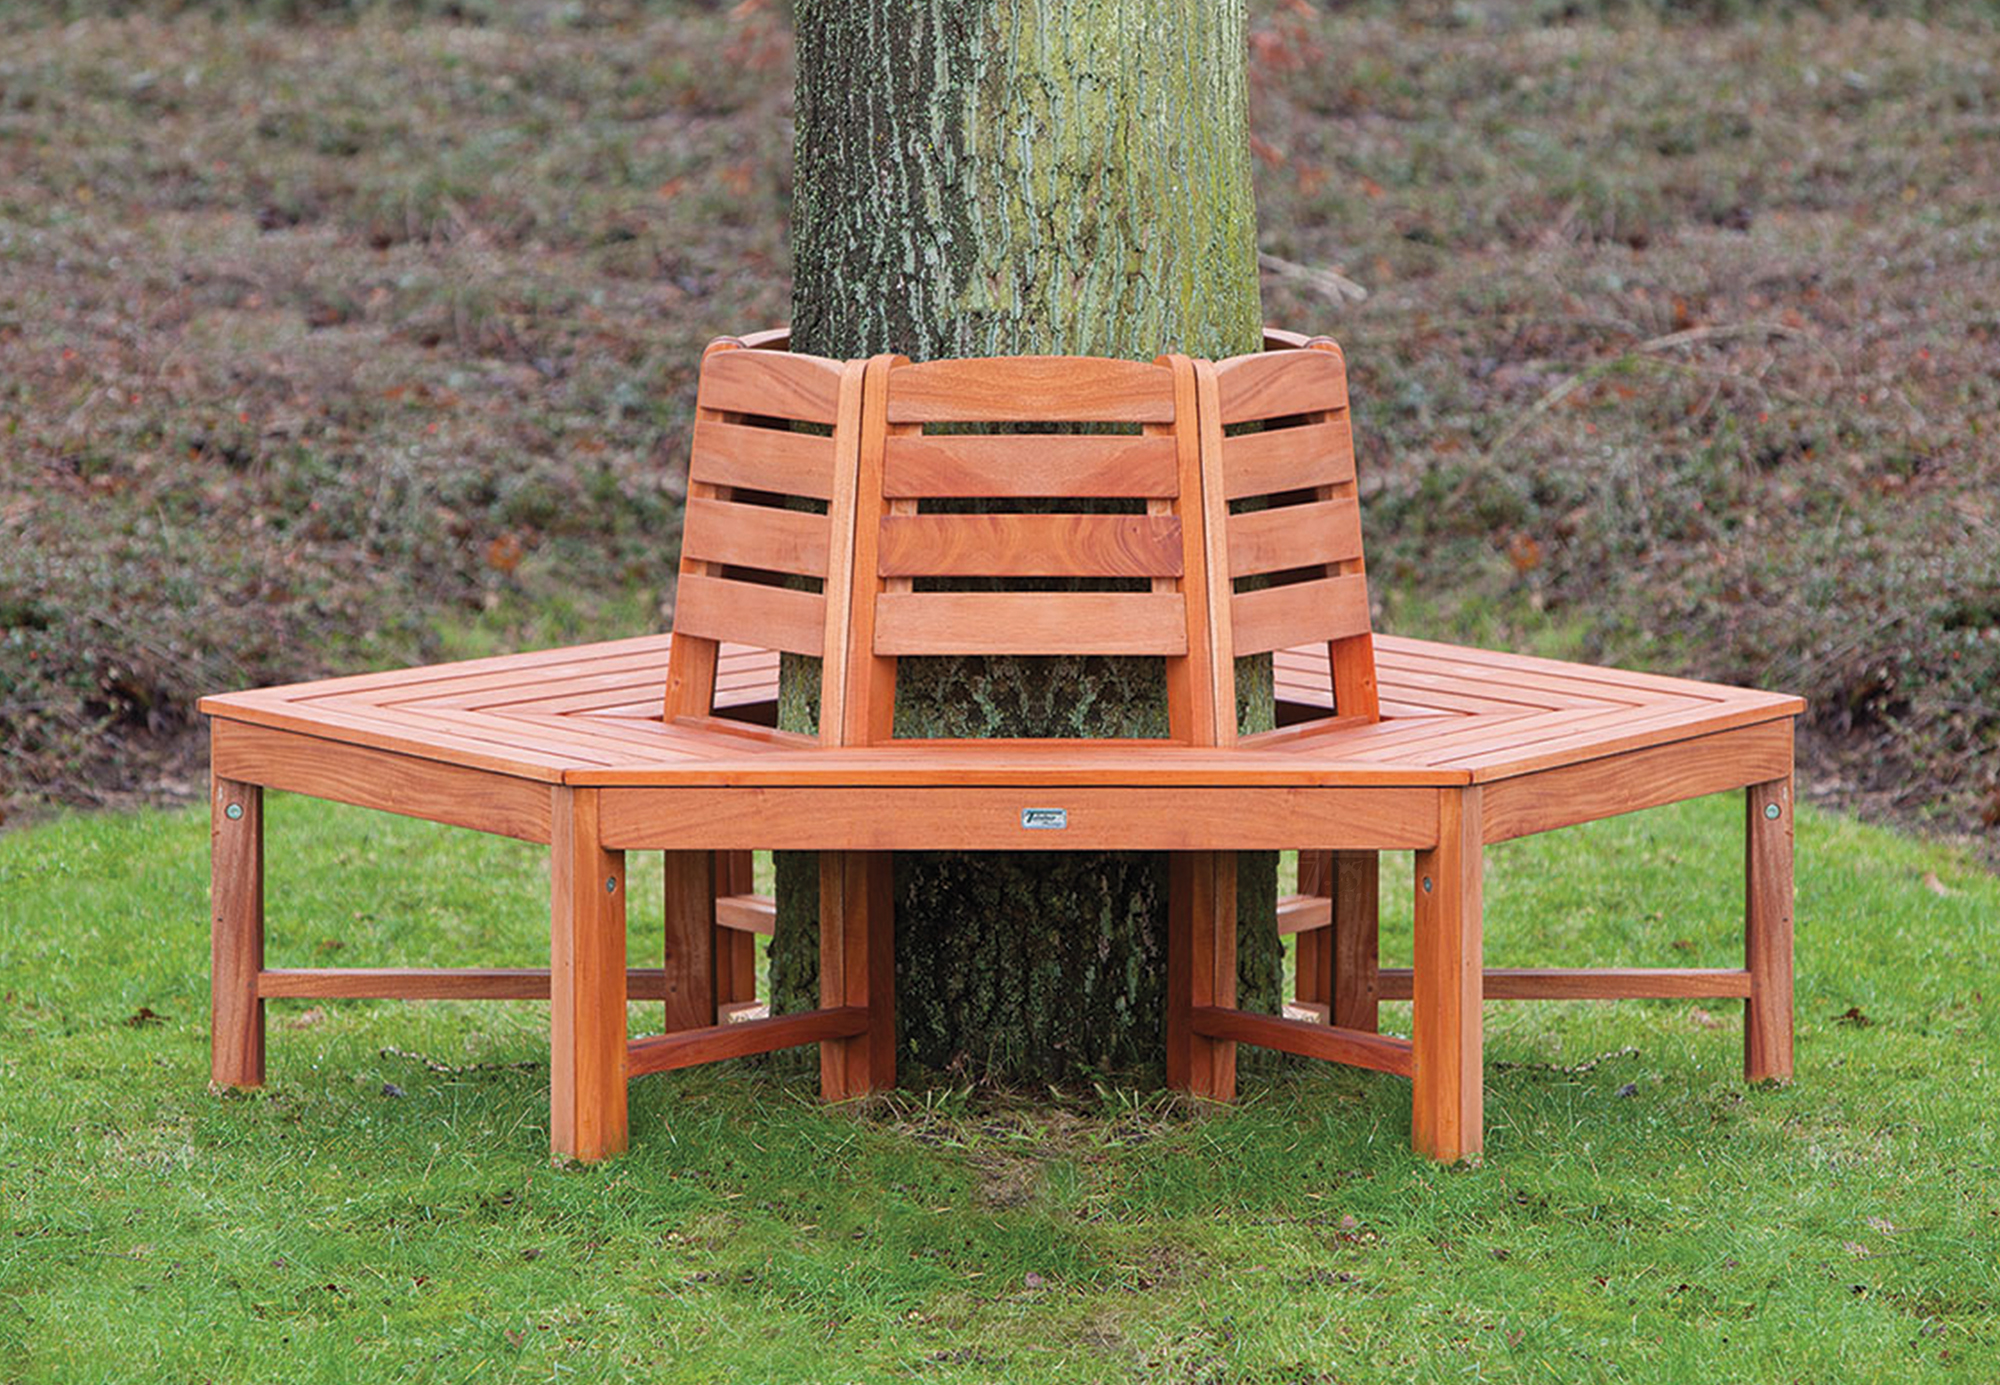 Tree bench, hardwood